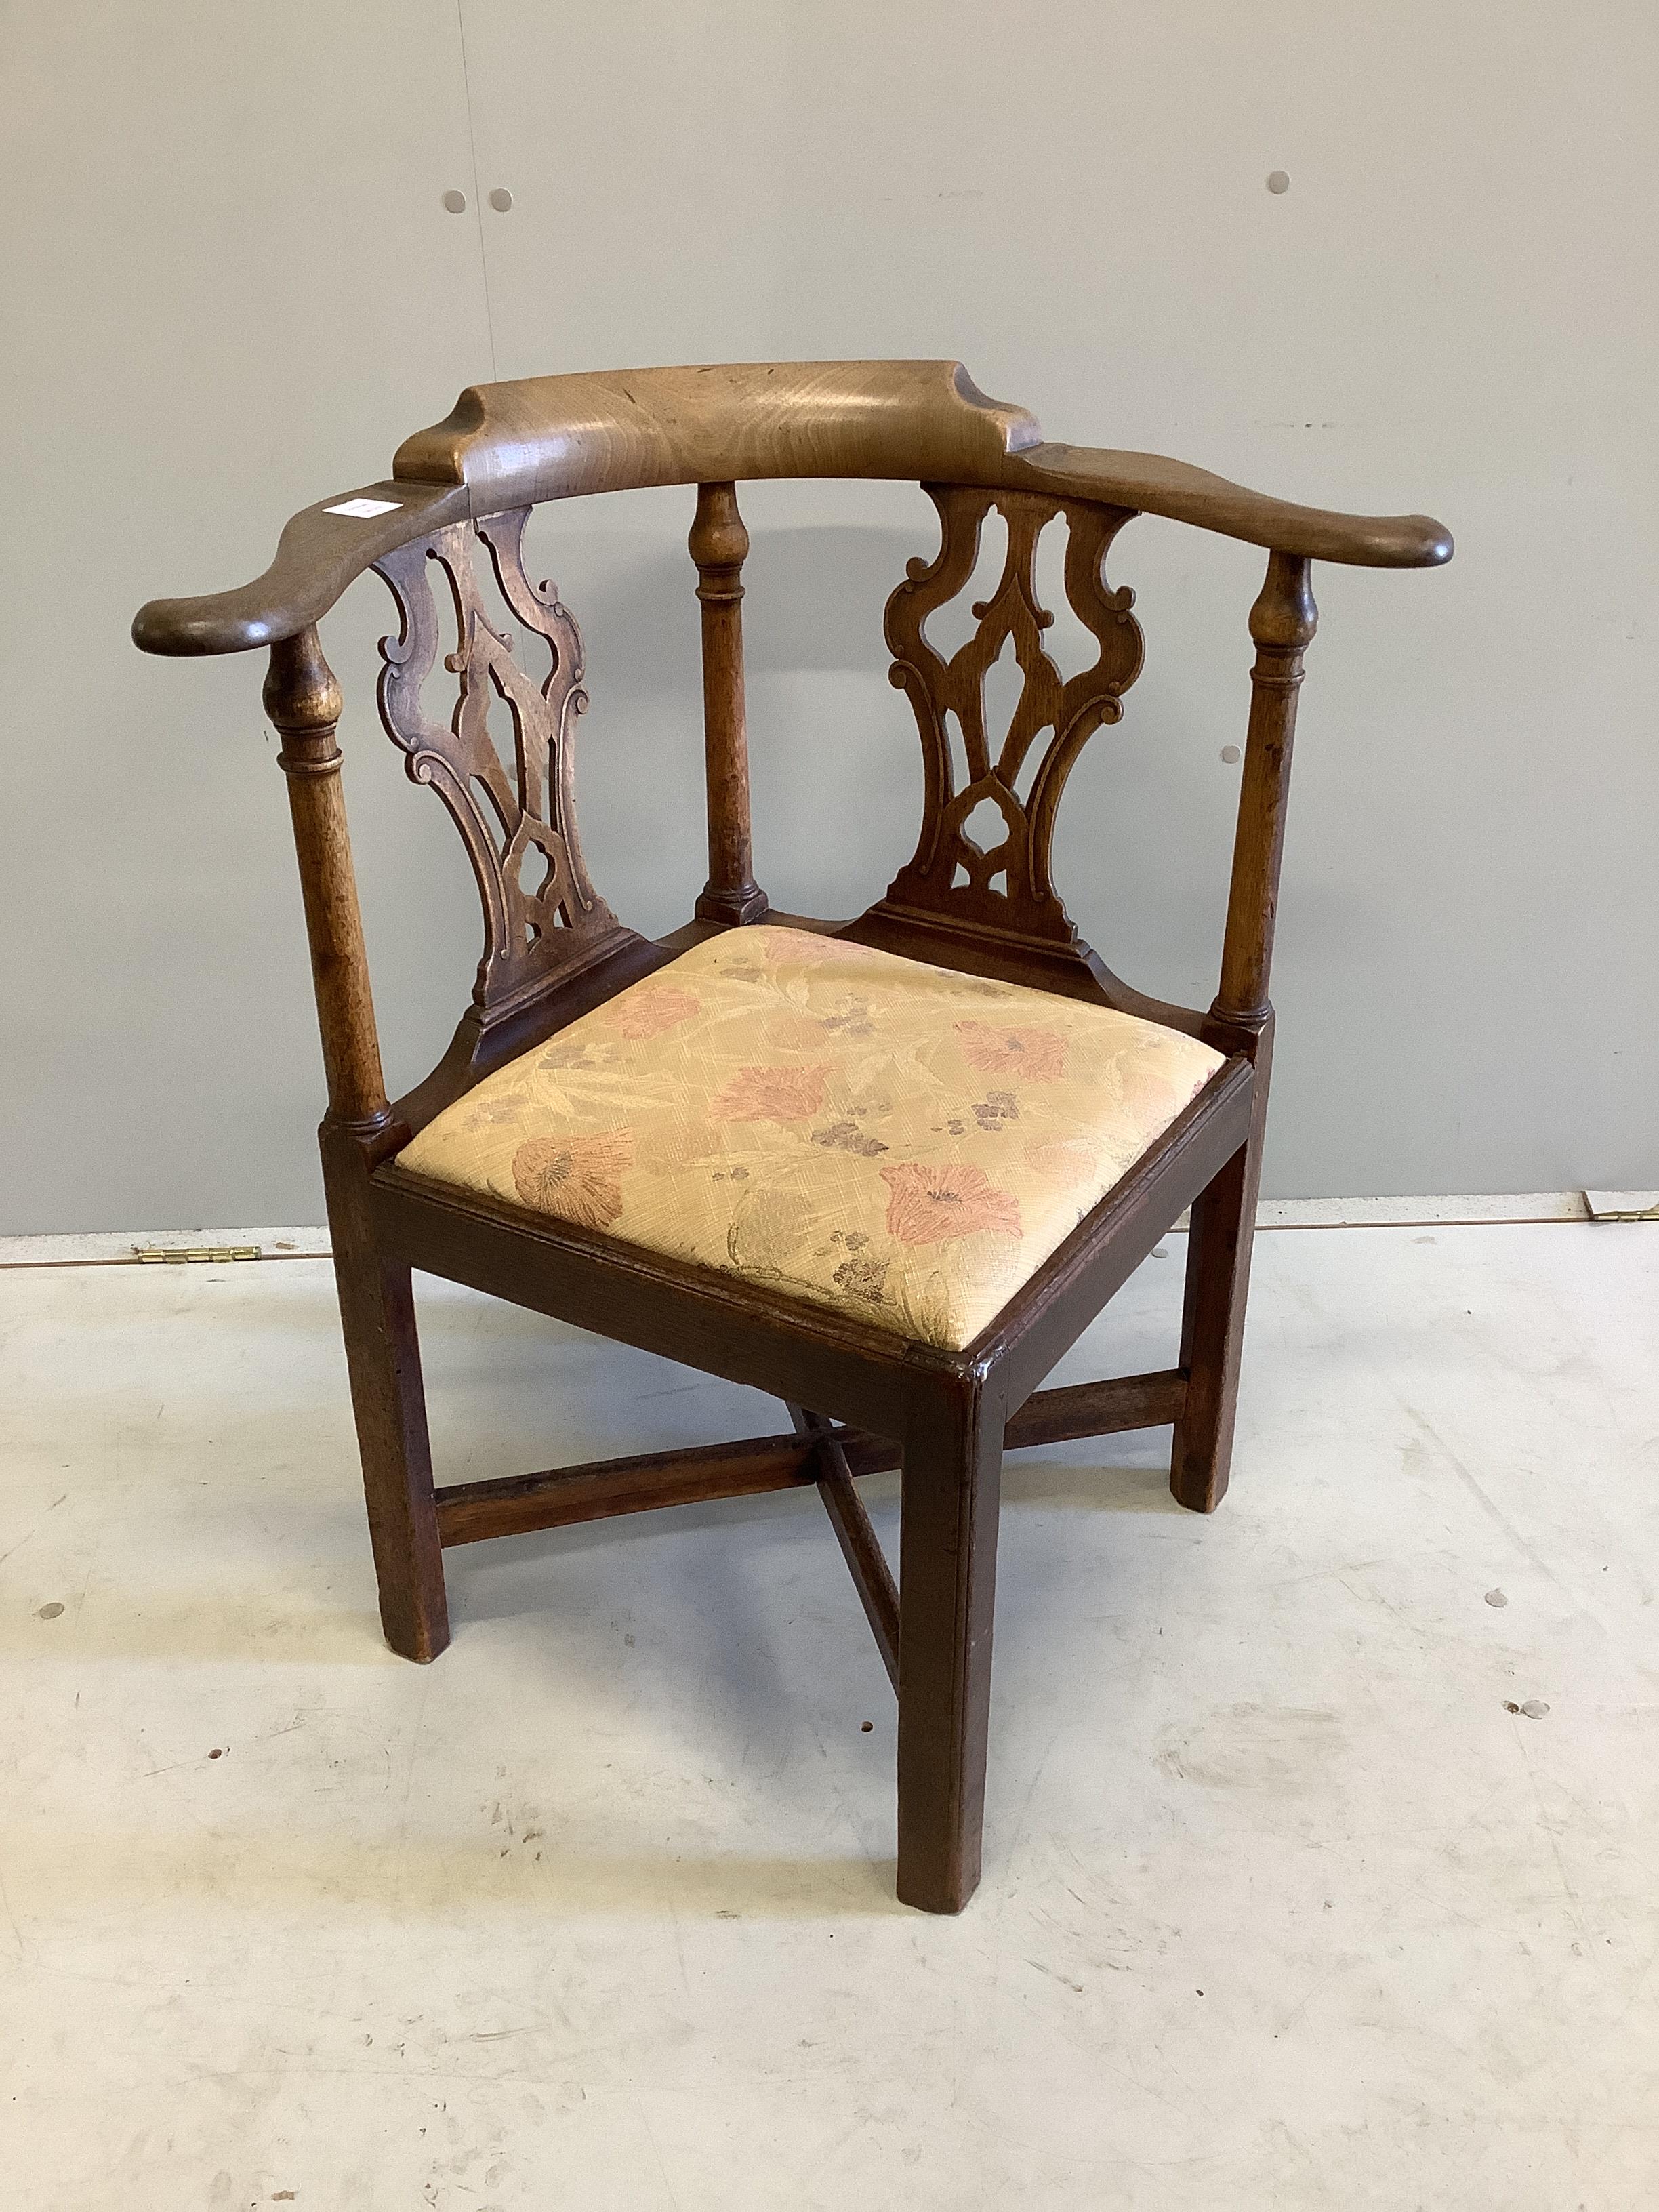 A George III mahogany corner elbow chair, width 73cm, depth 61cm, height 80cm